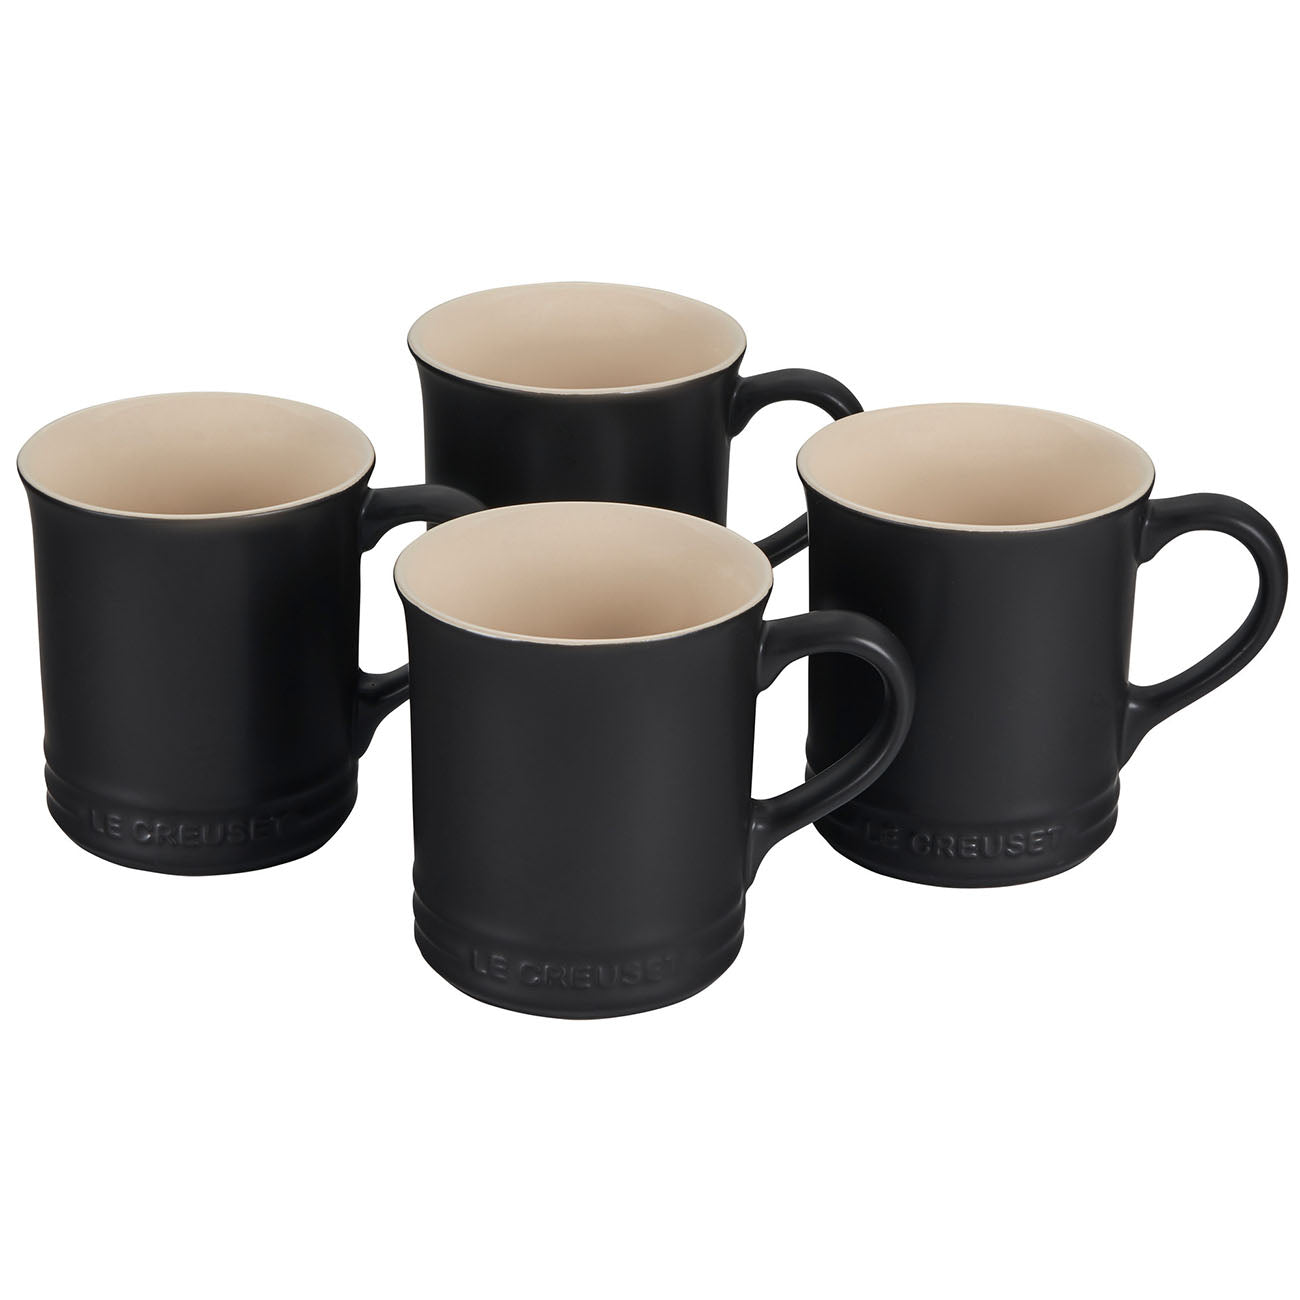 Le Creuset Espresso Cup - Set of 4